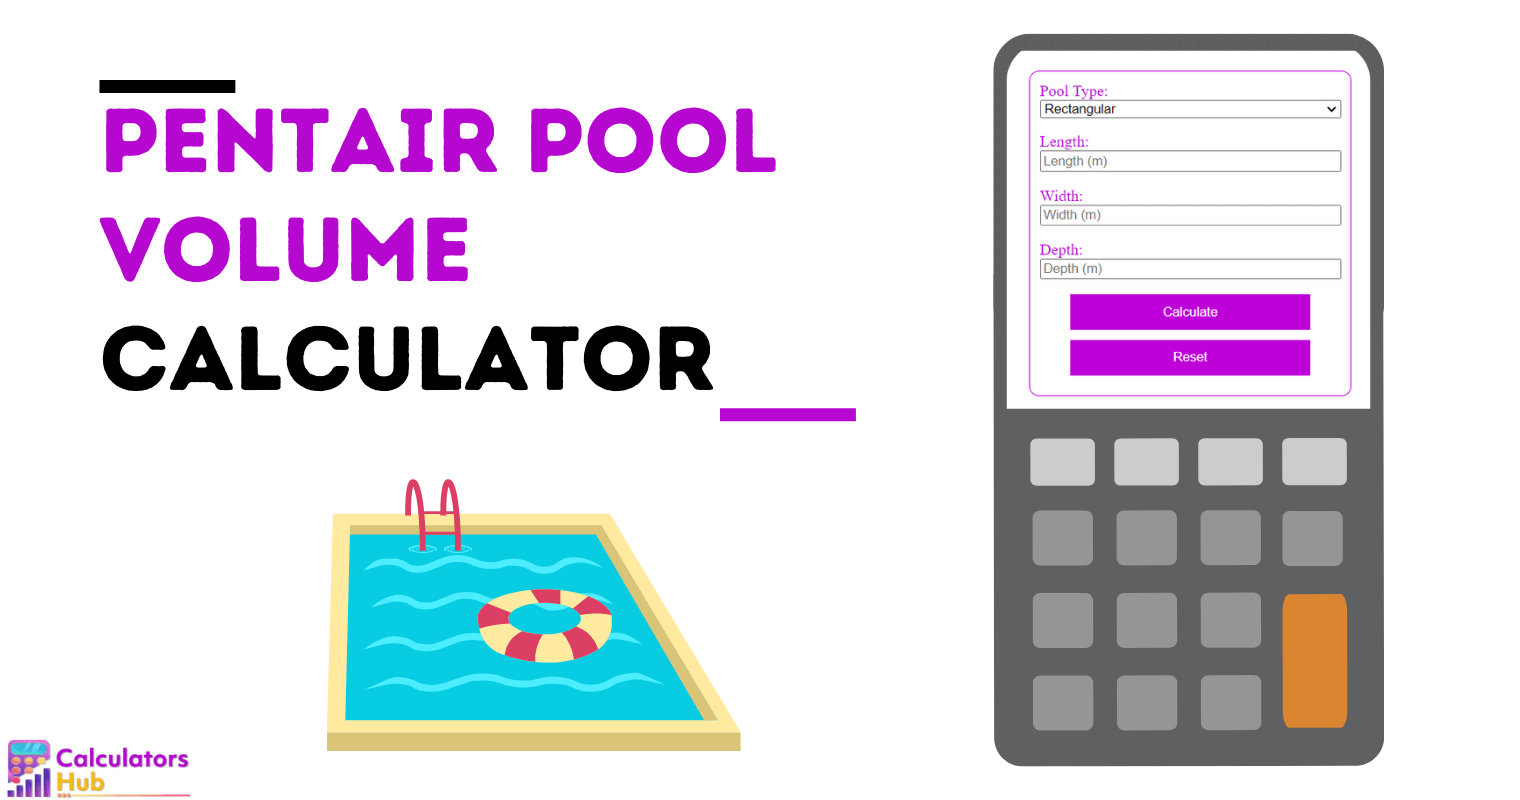 Pentair Pool Volume Calculator